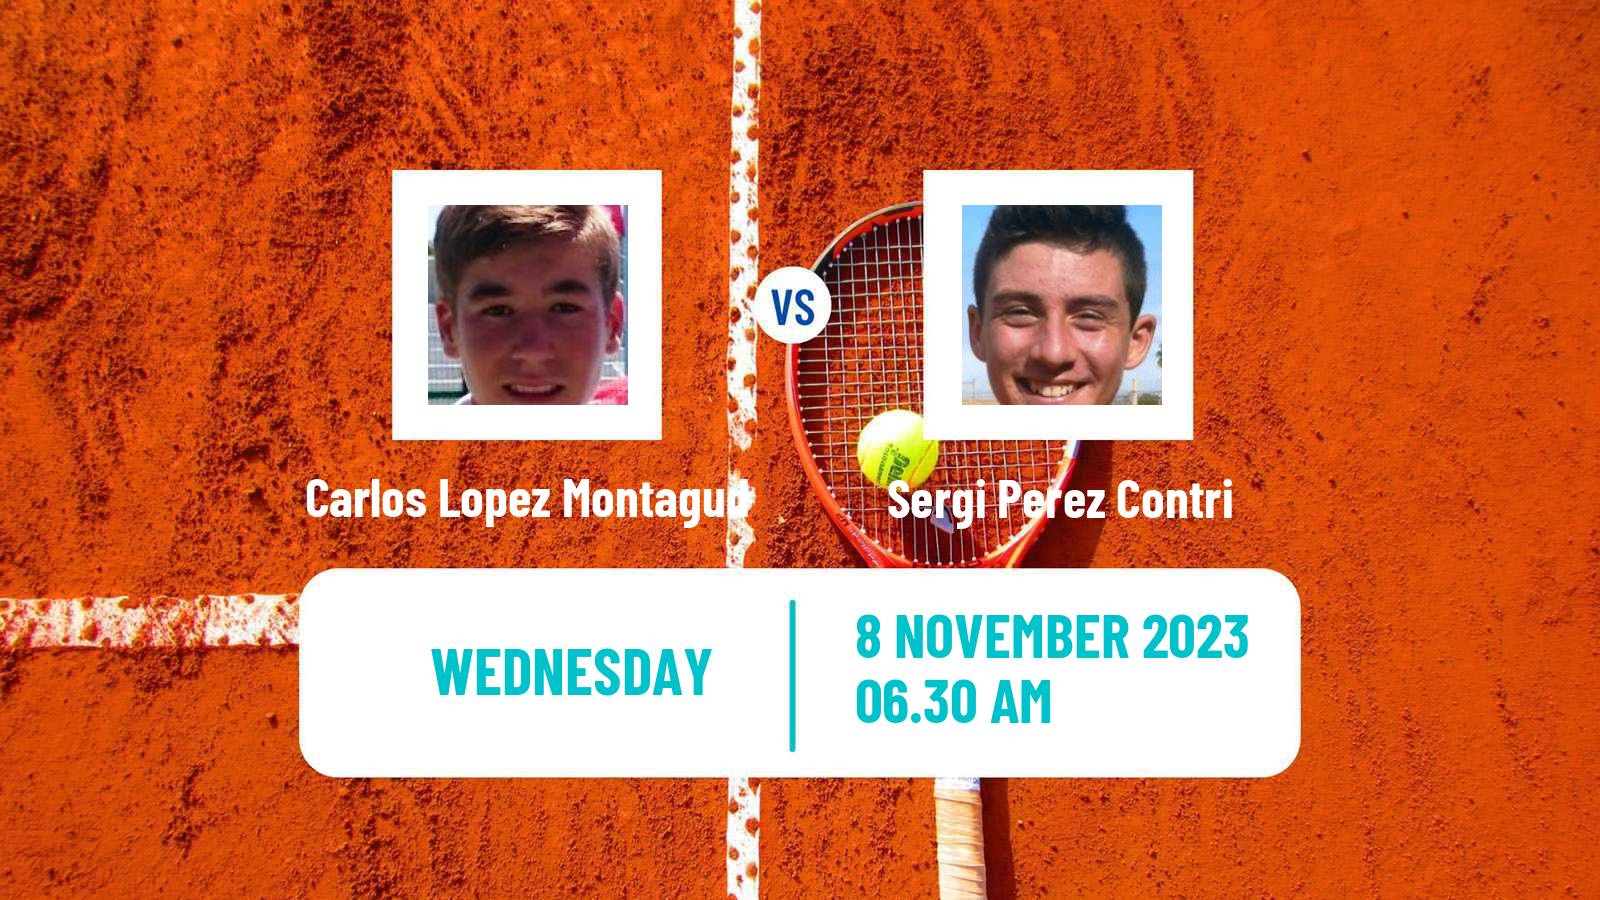 Tennis ITF M25 Benicarlo Men Carlos Lopez Montagud - Sergi Perez Contri